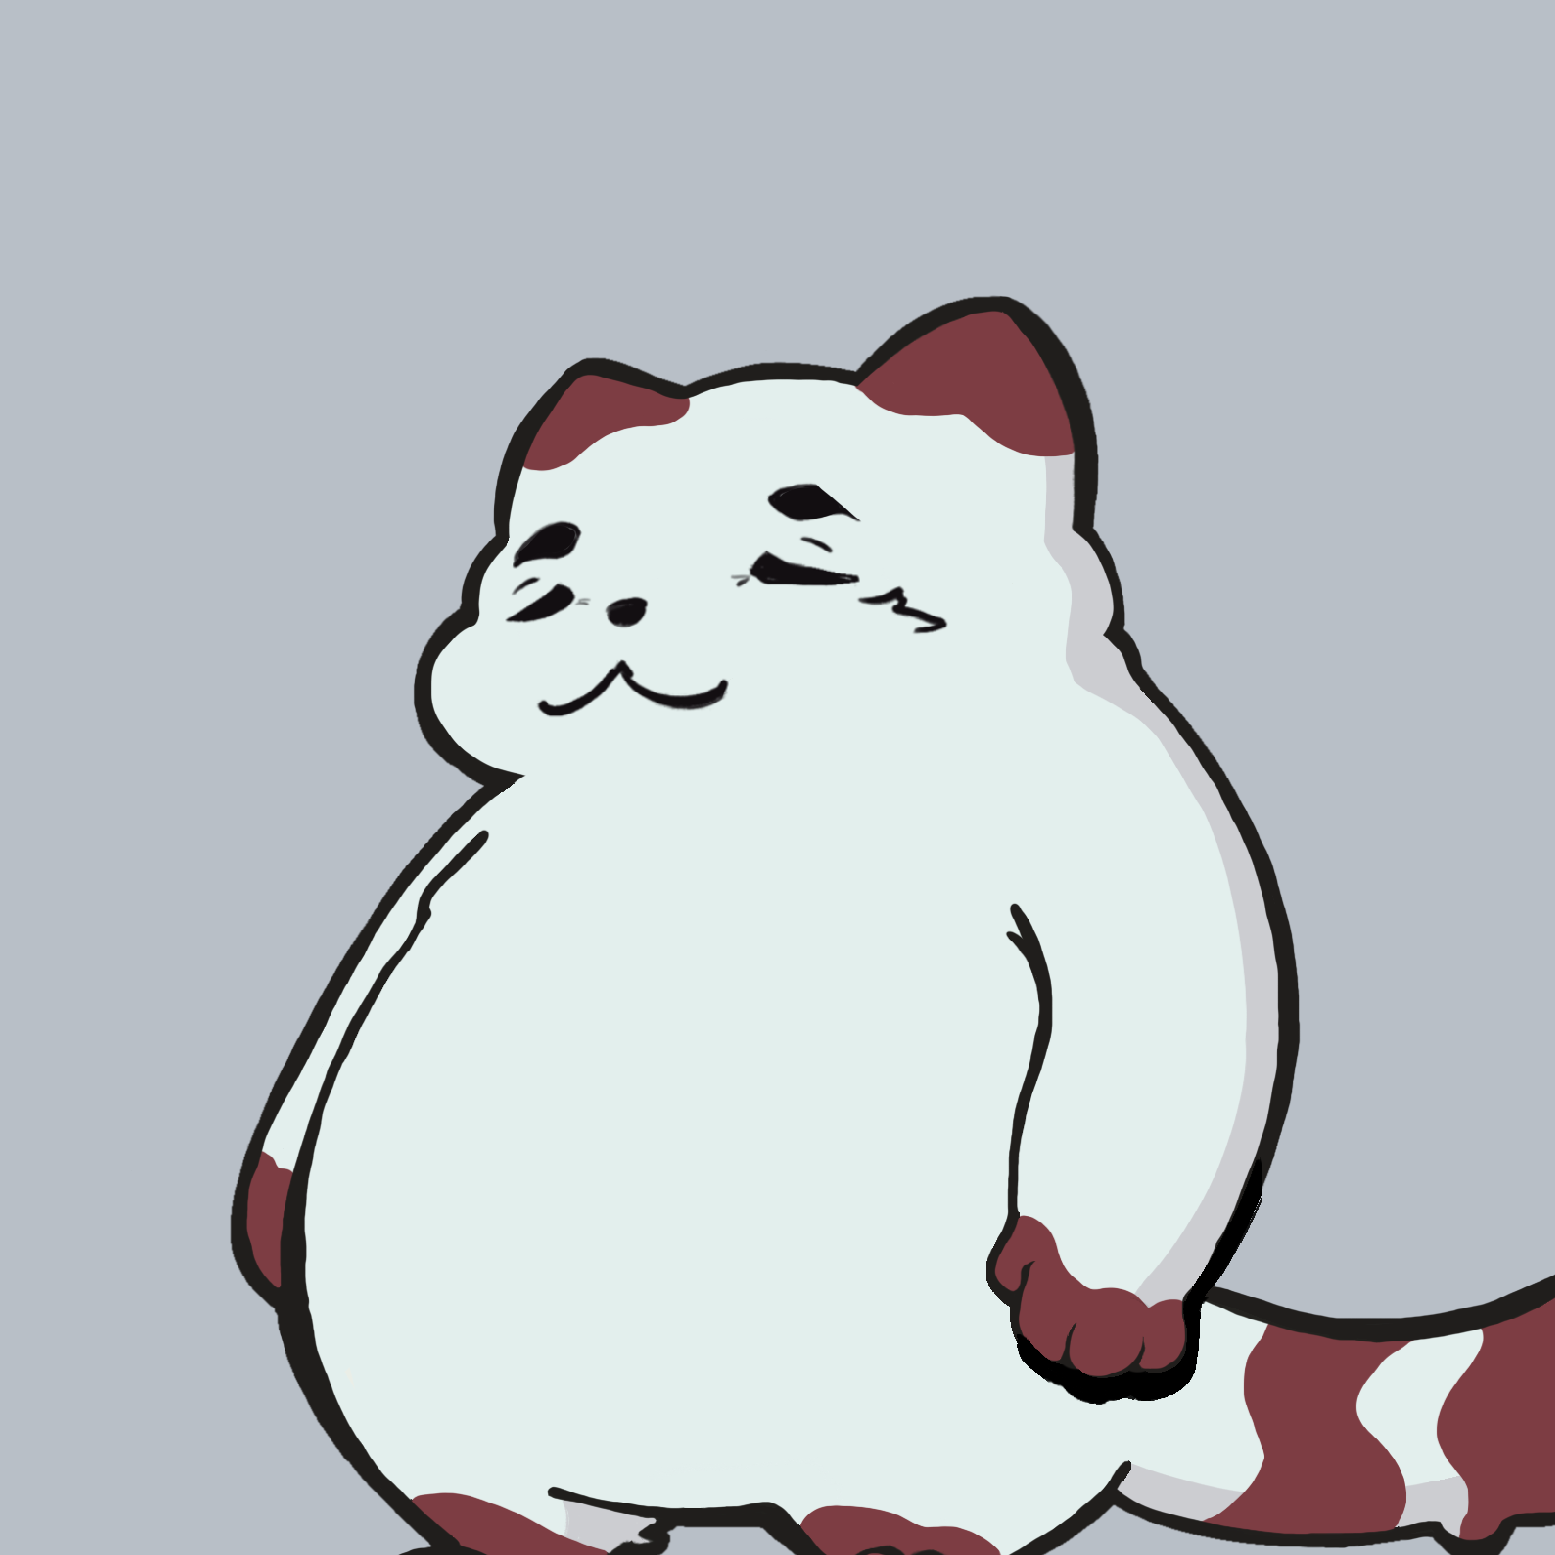 Degen Fat Cat the 17287th